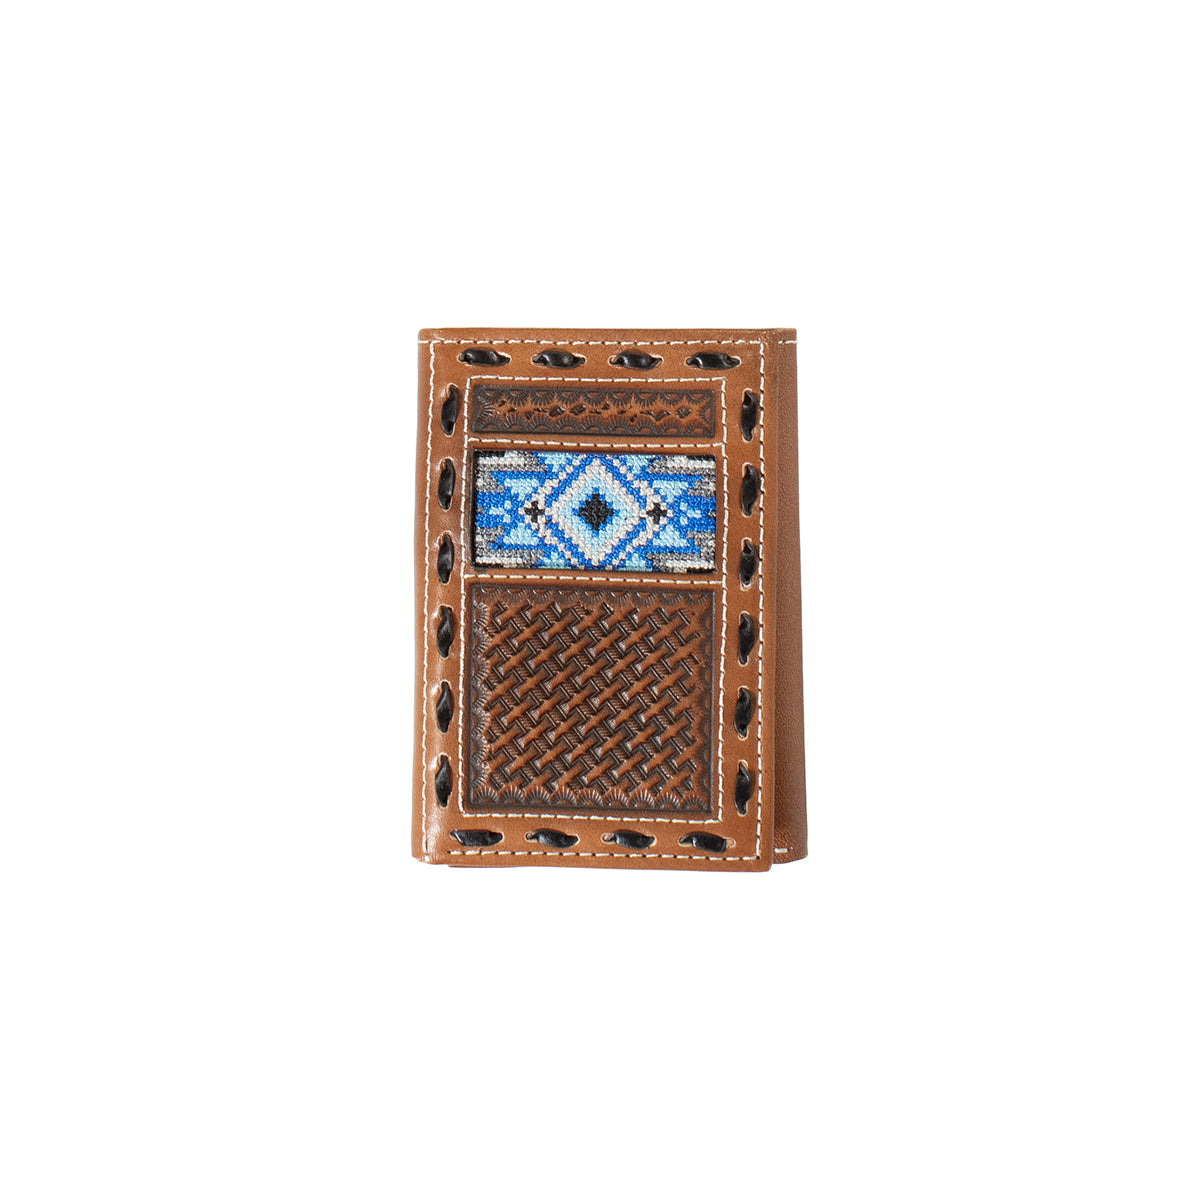 3D Men's Diamond Inlay Trifold Wallet - Brown/Blue